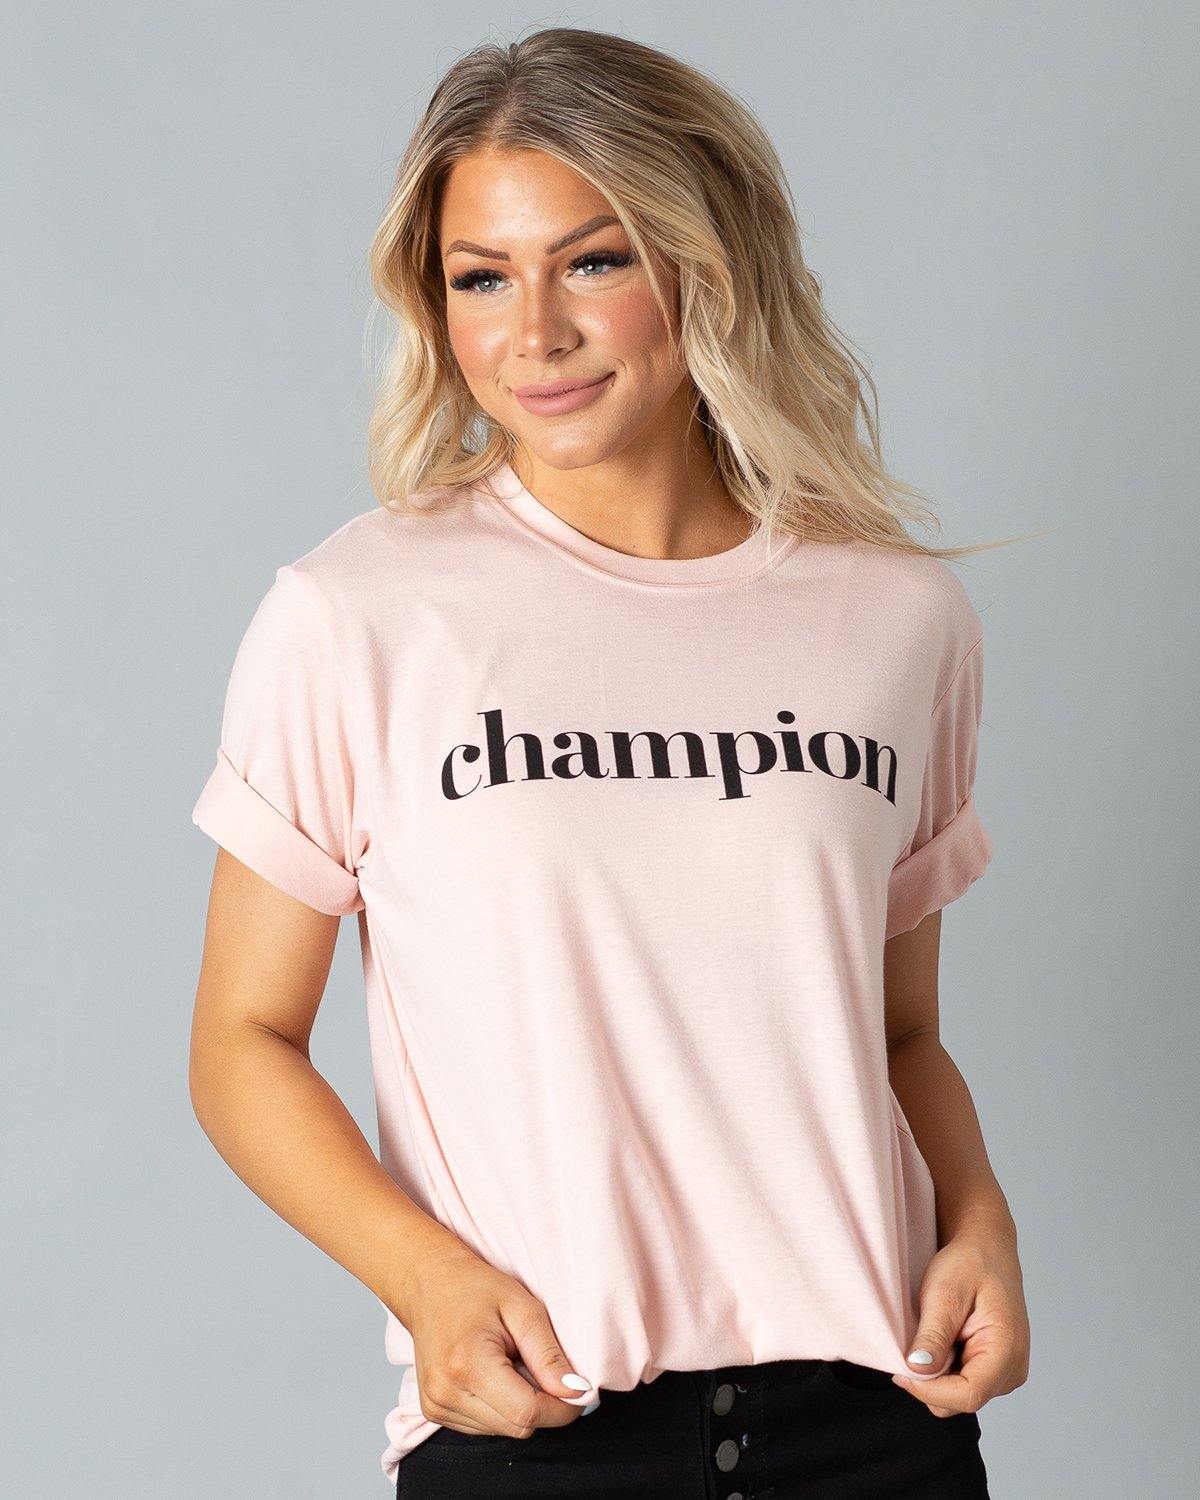 champion t shirt wholesale